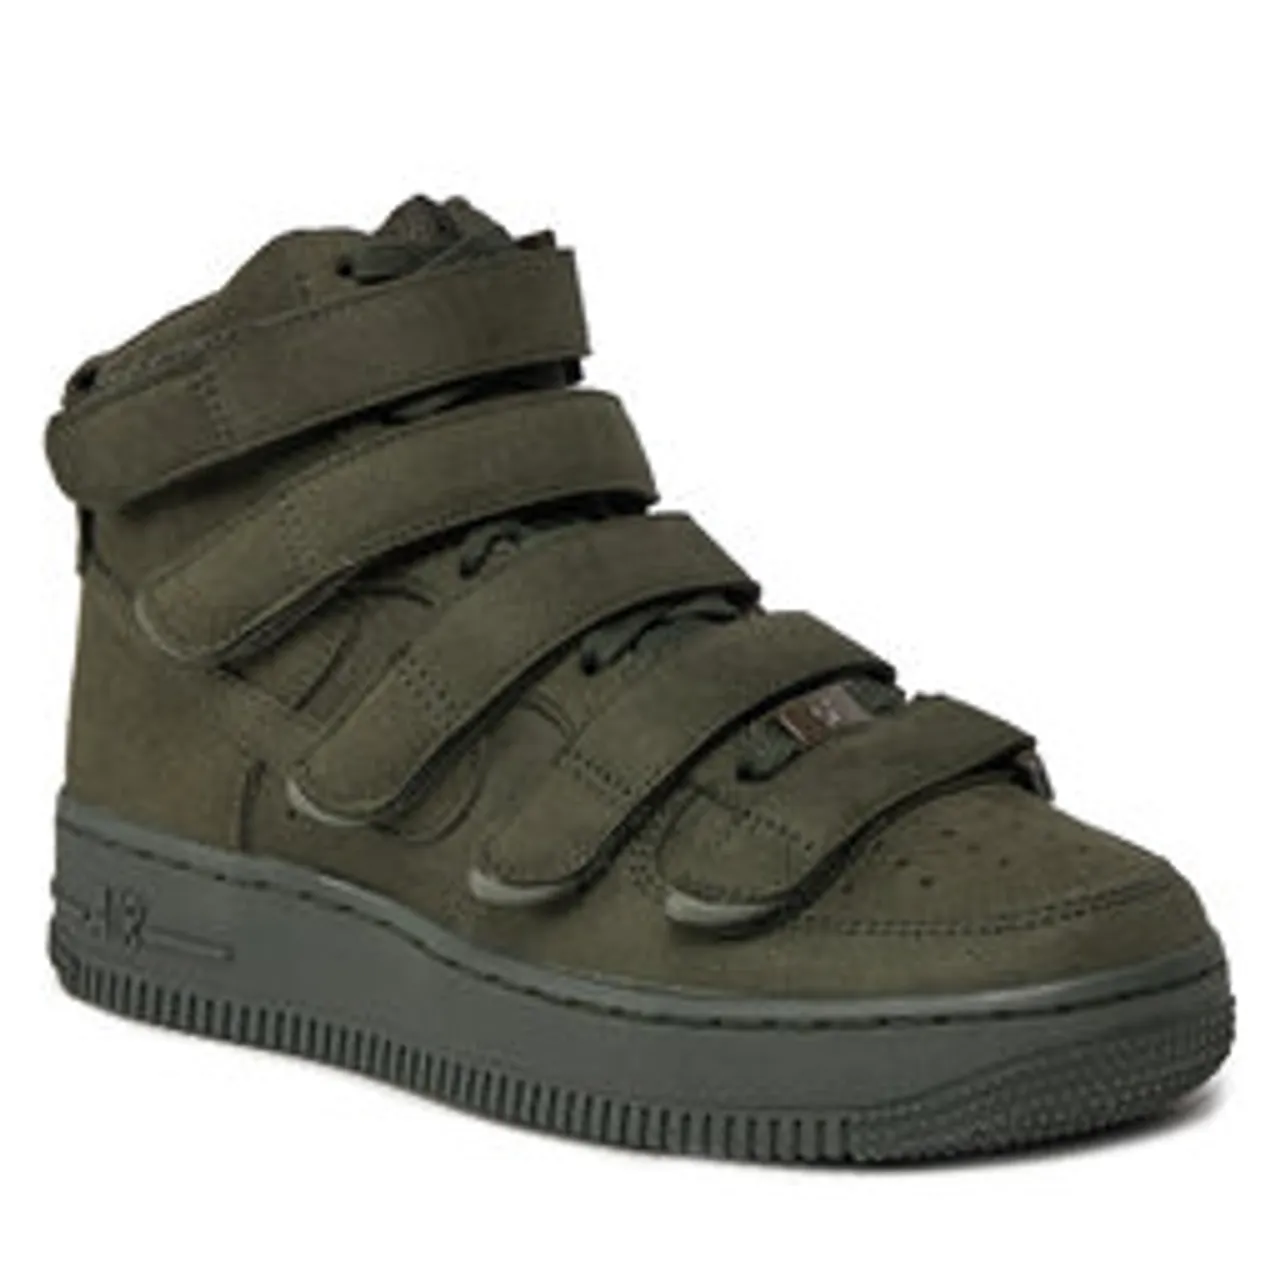 Schuhe Nike Air Force 1 High '07 Sp DM7926 300 Sequoia/Sequoia/Sequoia